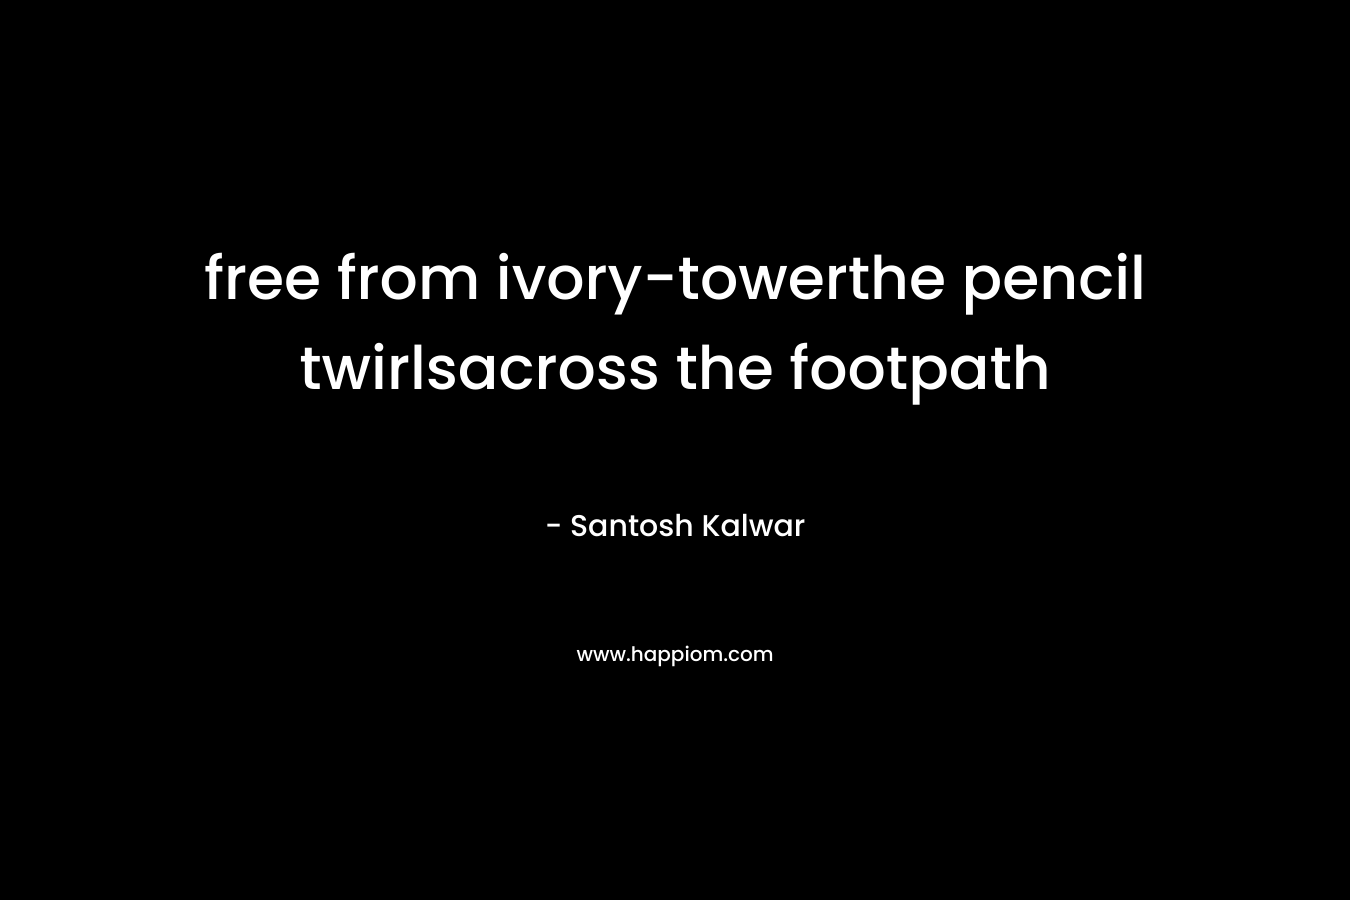 free from ivory-towerthe pencil twirlsacross the footpath – Santosh Kalwar